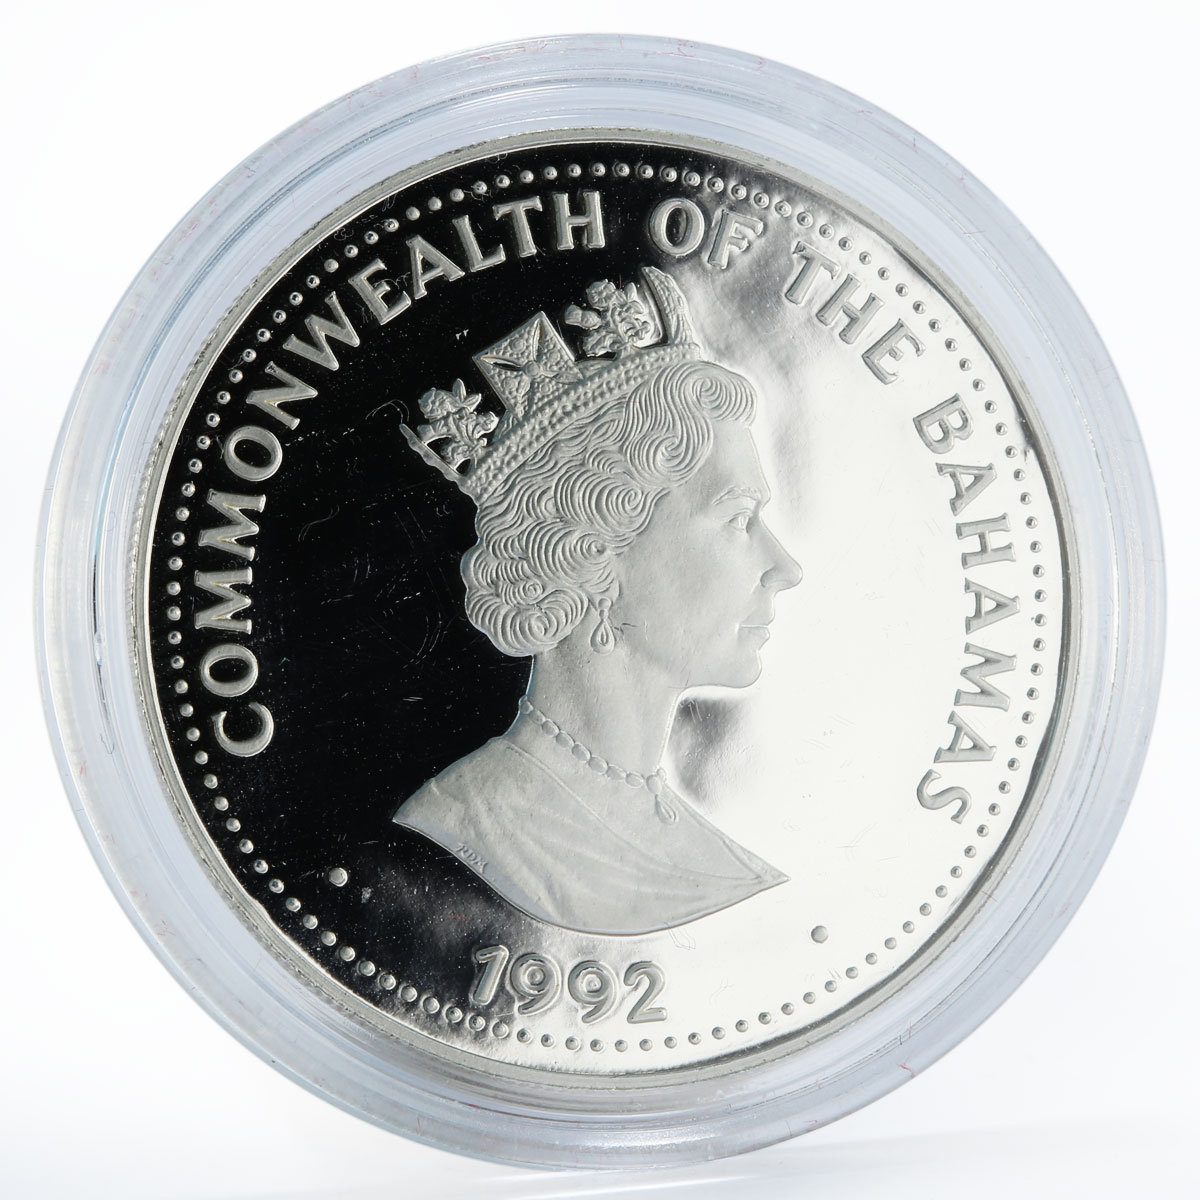 Bahamas 5 dollars Thomas Edison Electric Light proof silver coin 1992